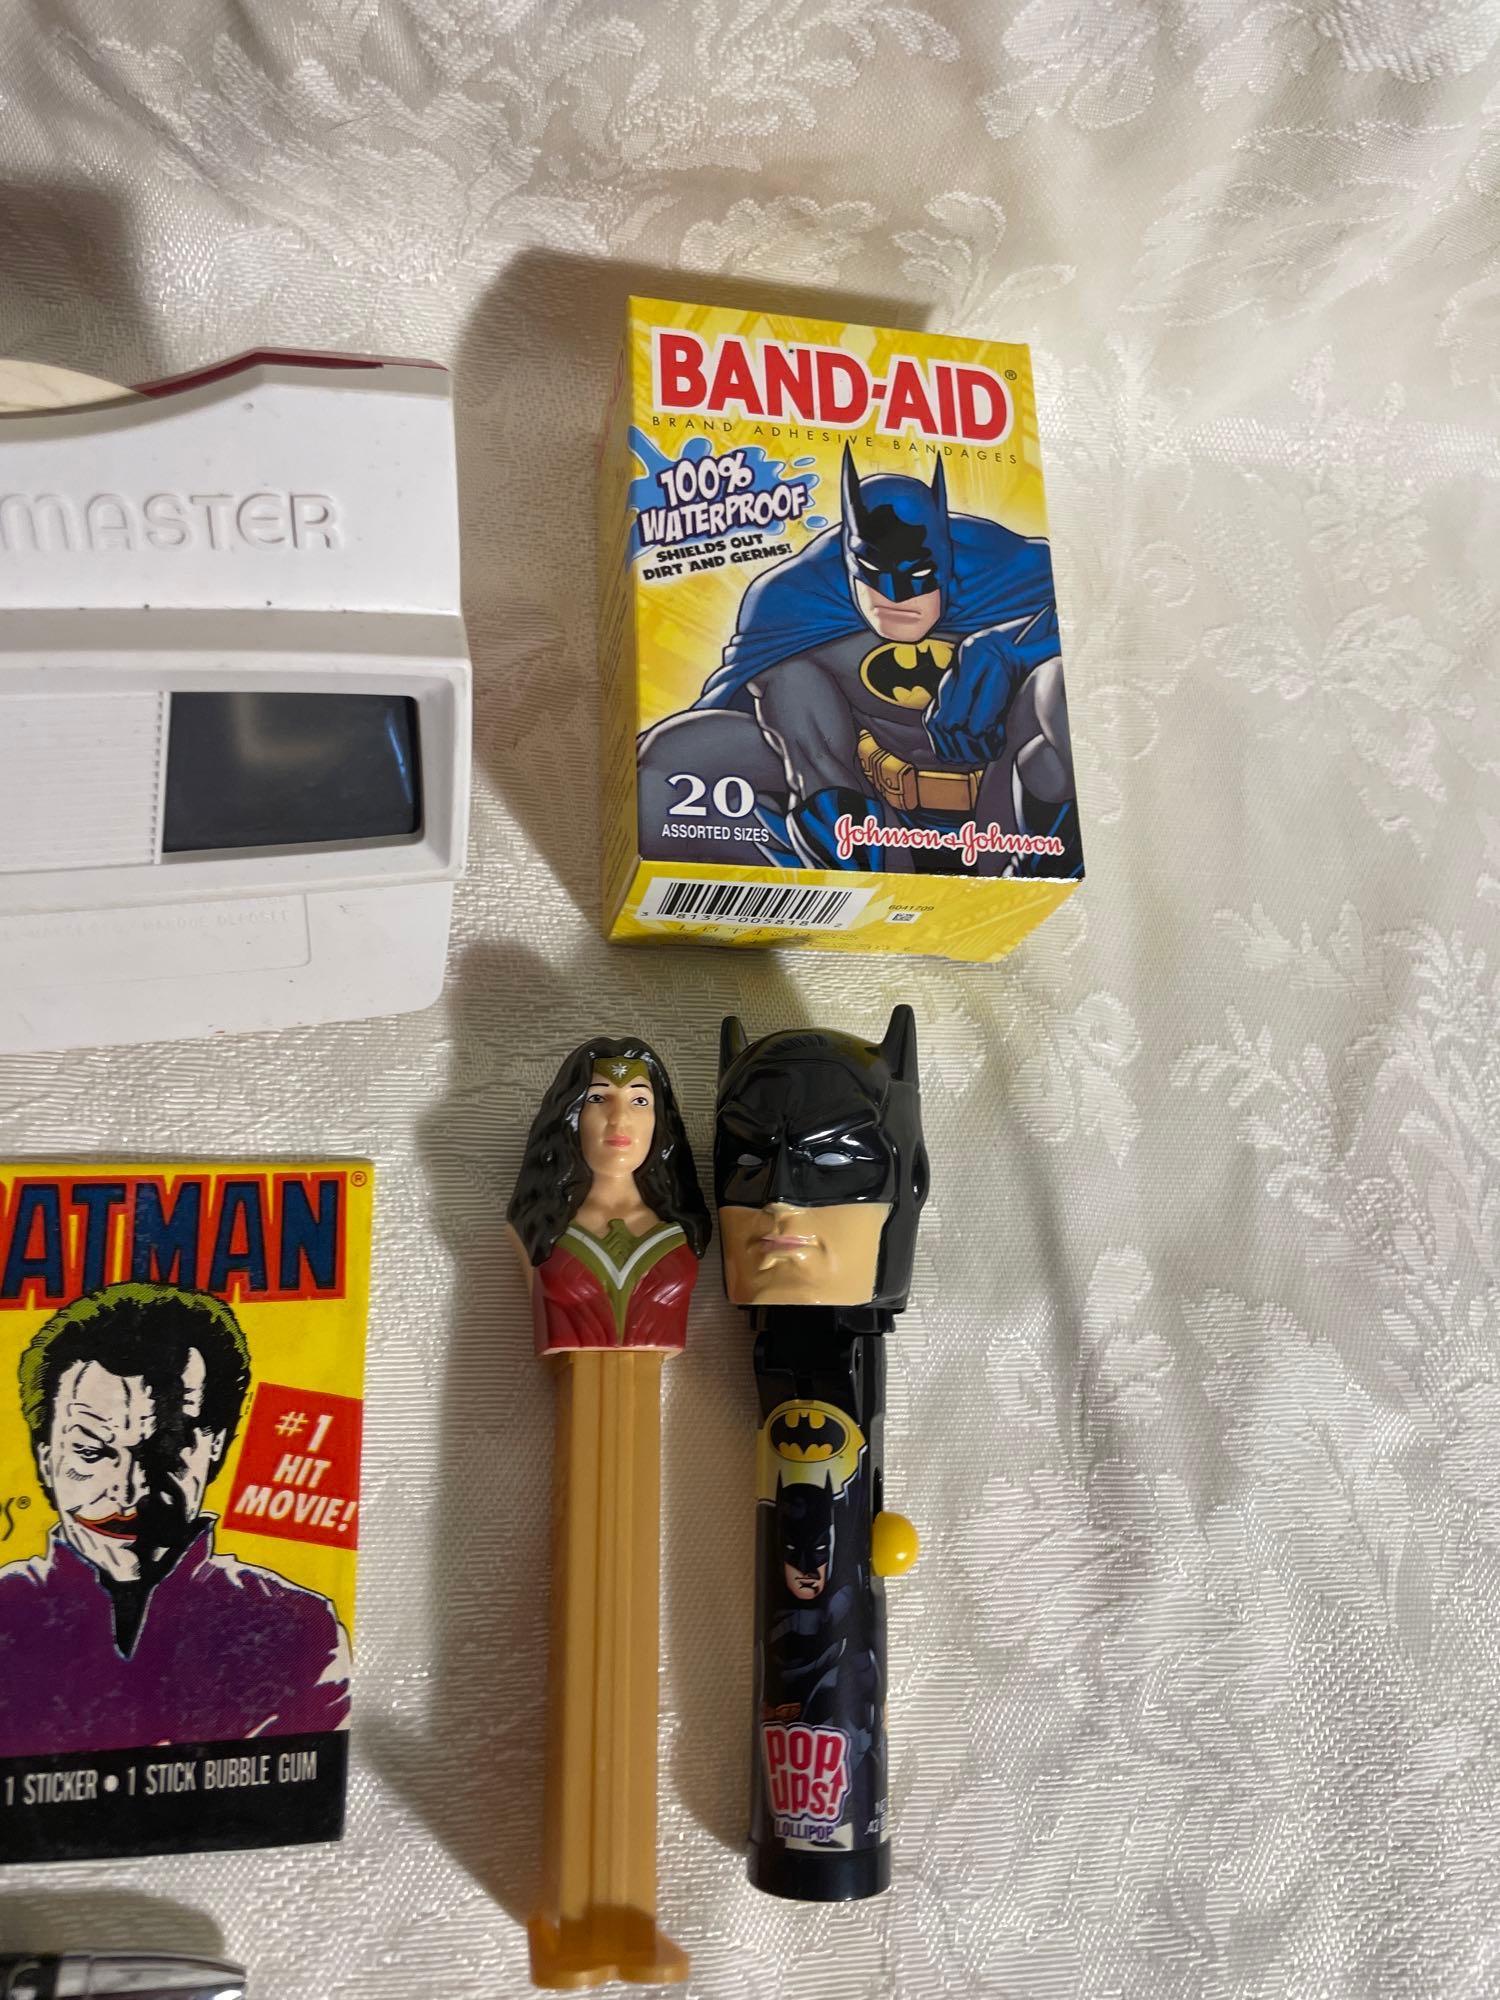 Batman Cards, View Master Reels, Pen, Pez Dispensers and more